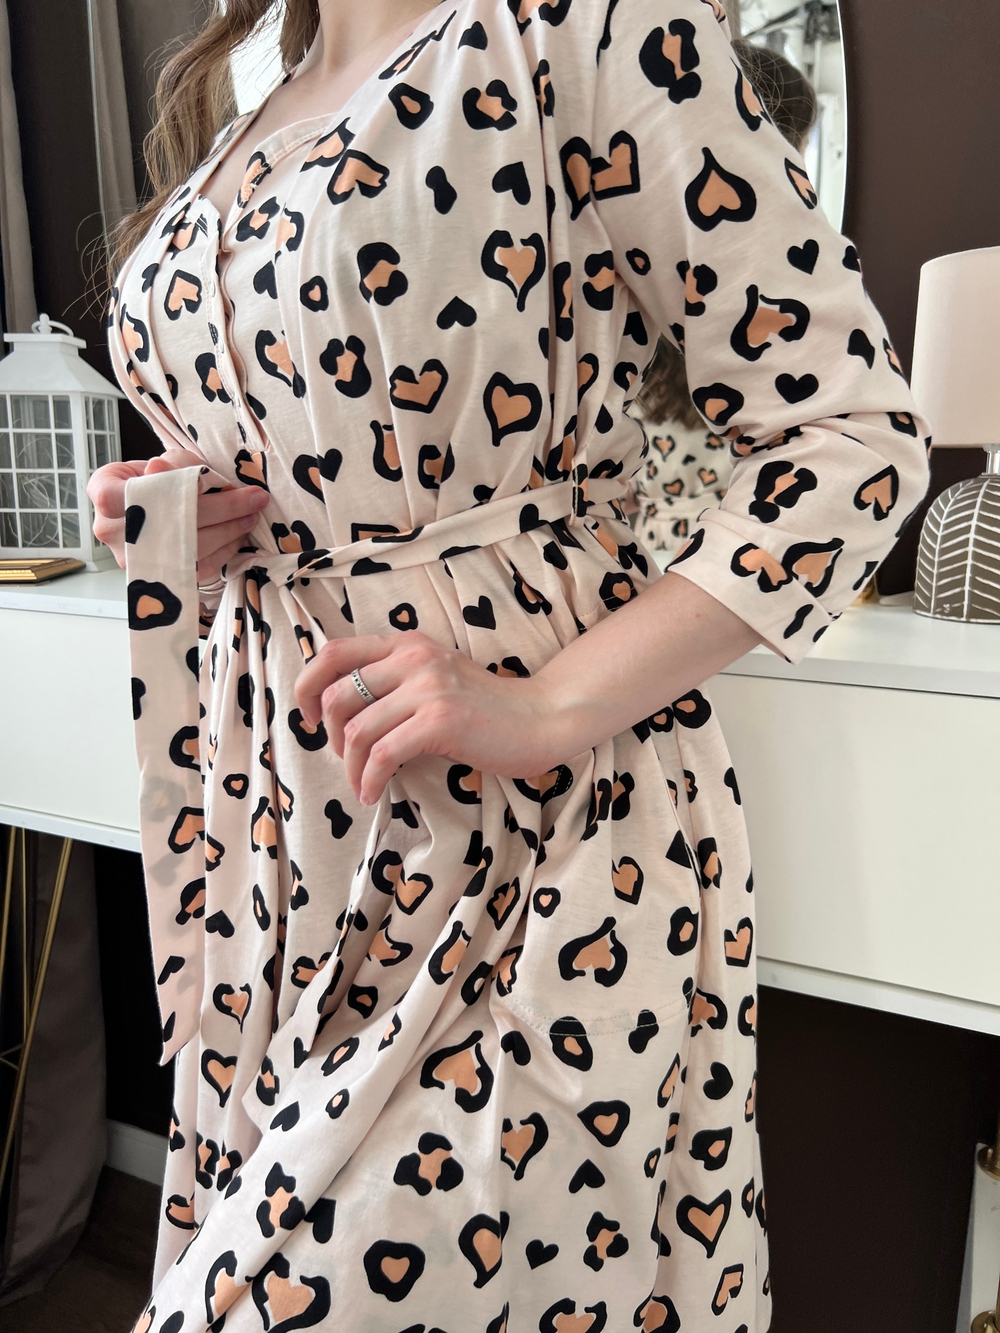 Комплект ночной халат+сорочка (9012051, бежевый леопард)